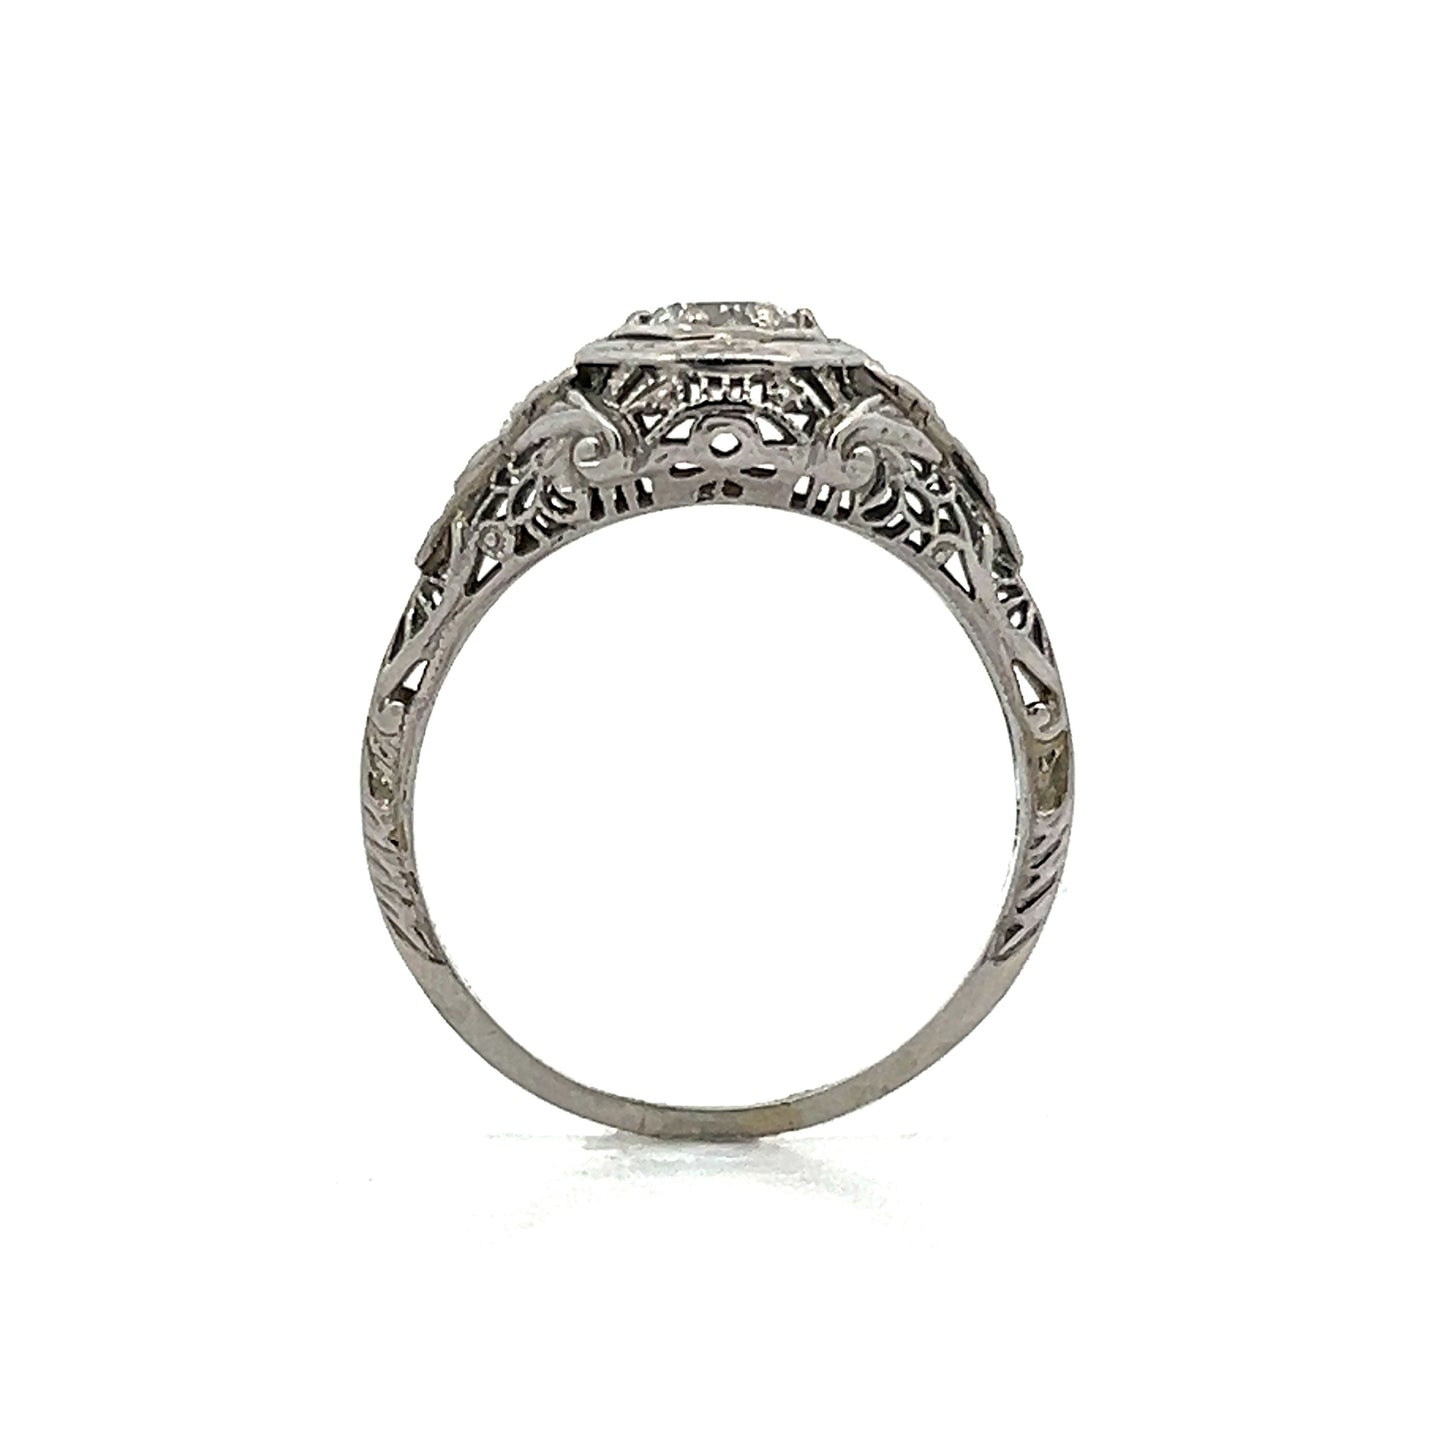 1930's Filigree Diamond Engagement Ring in 14k Gold